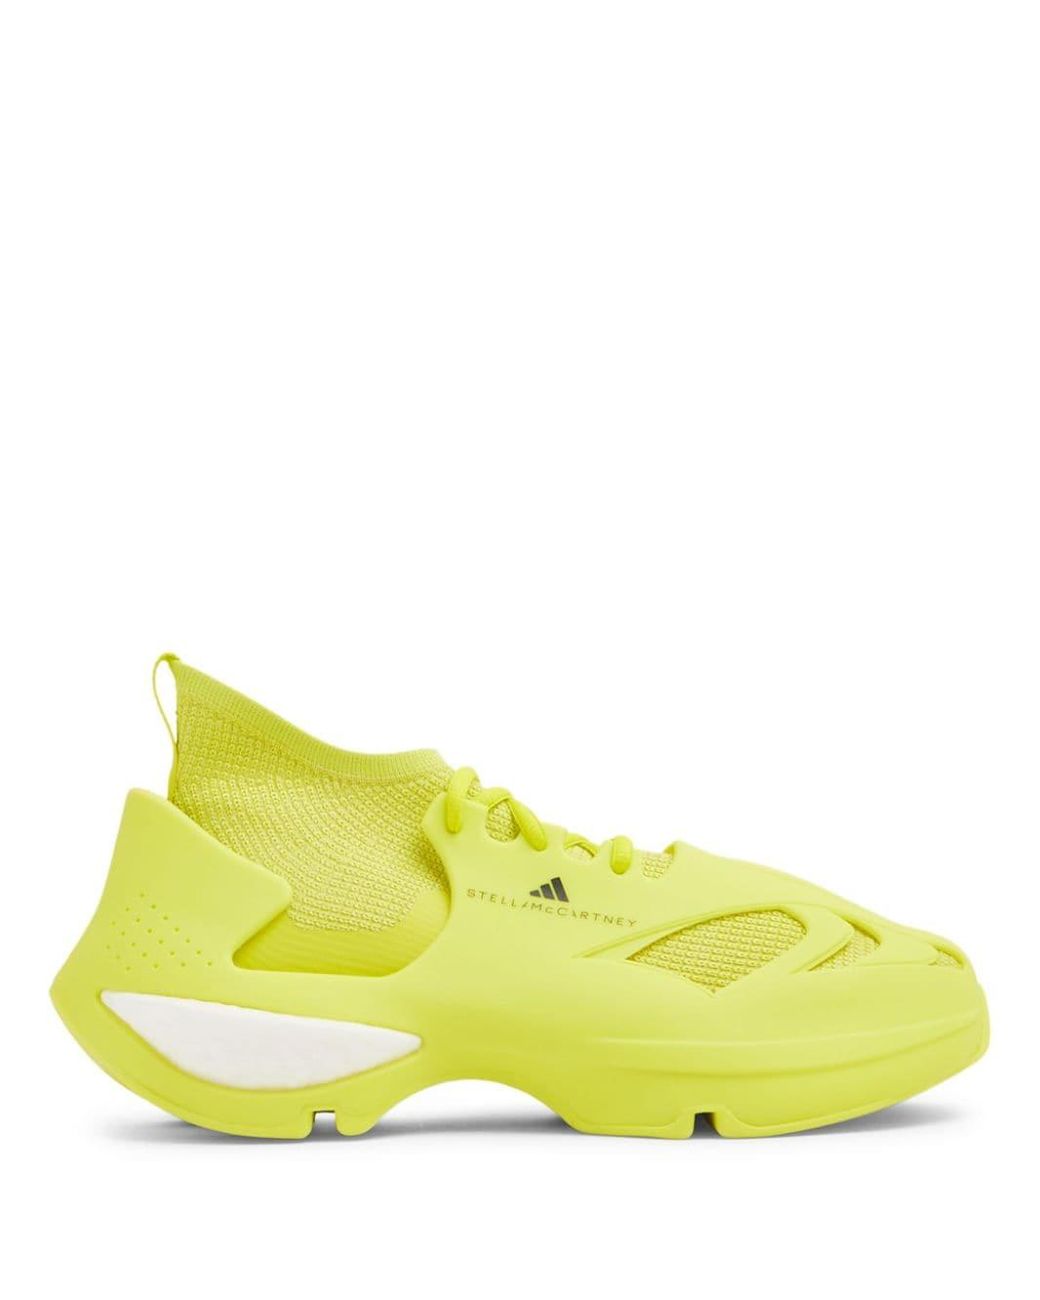 adidas X Stella Mccartney Sneakers in Yellow | Lyst